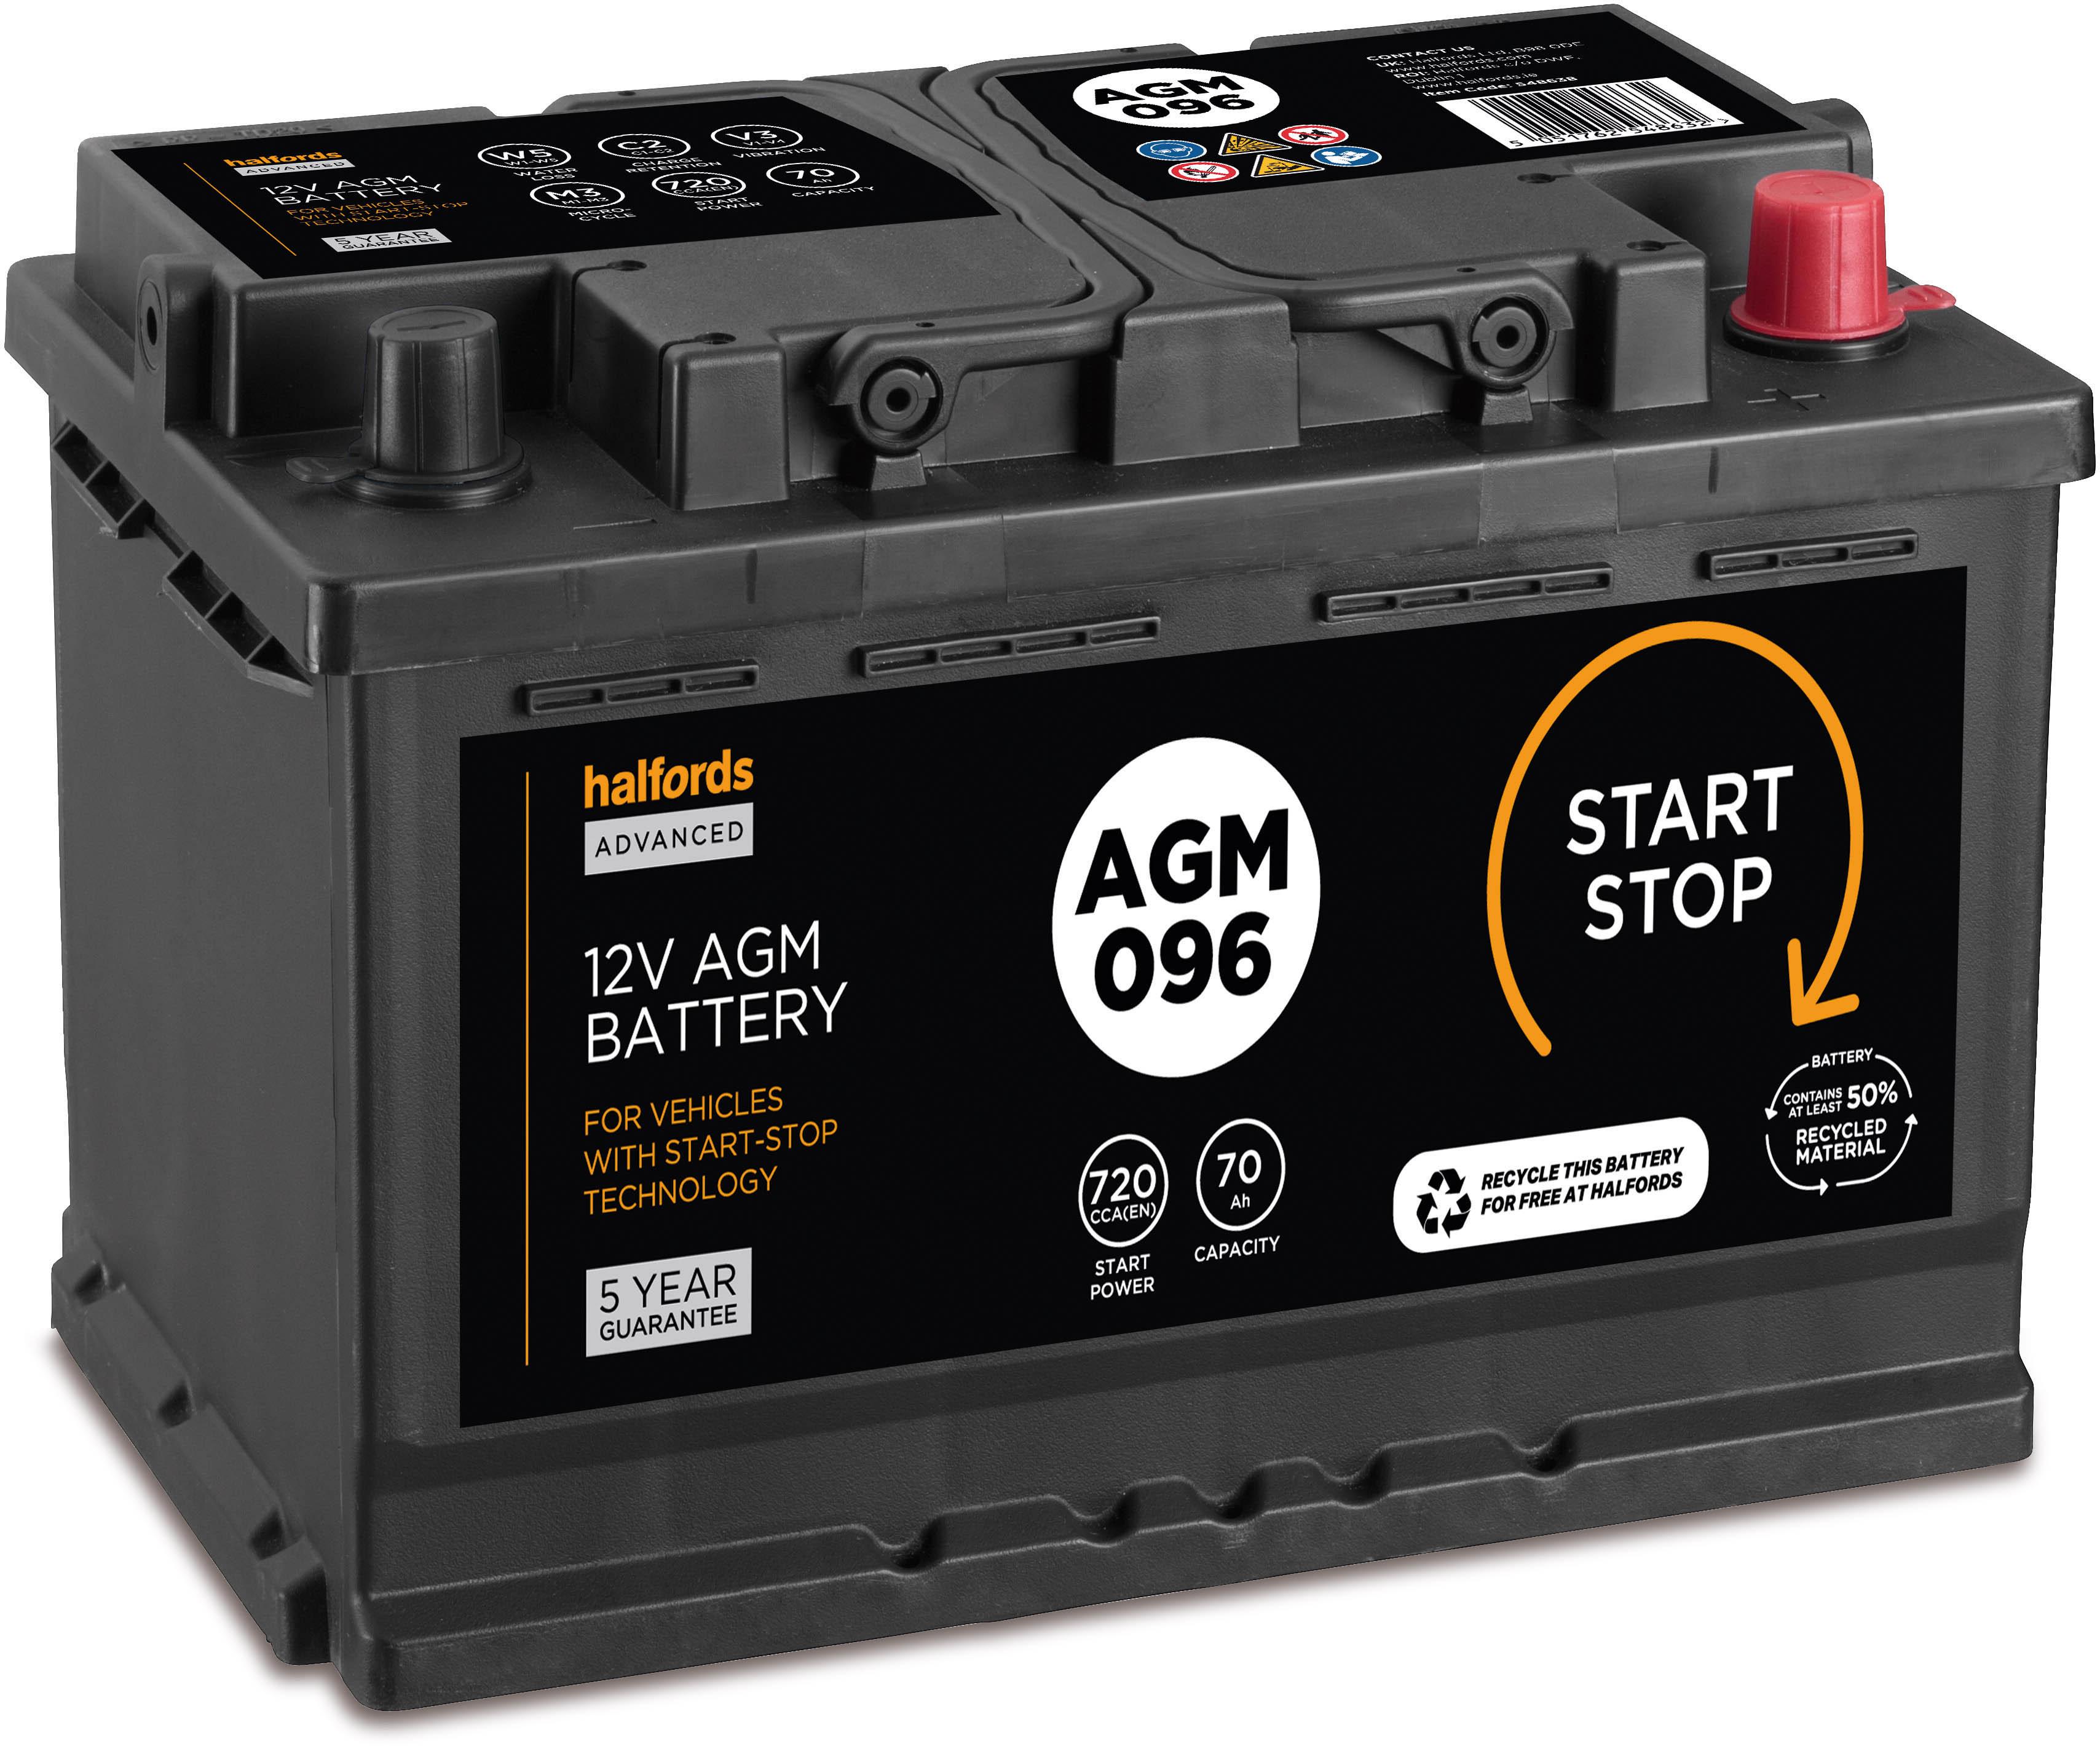 Halfords AGM096 Start/Stop 12V Car Battery 5 Year Guarantee